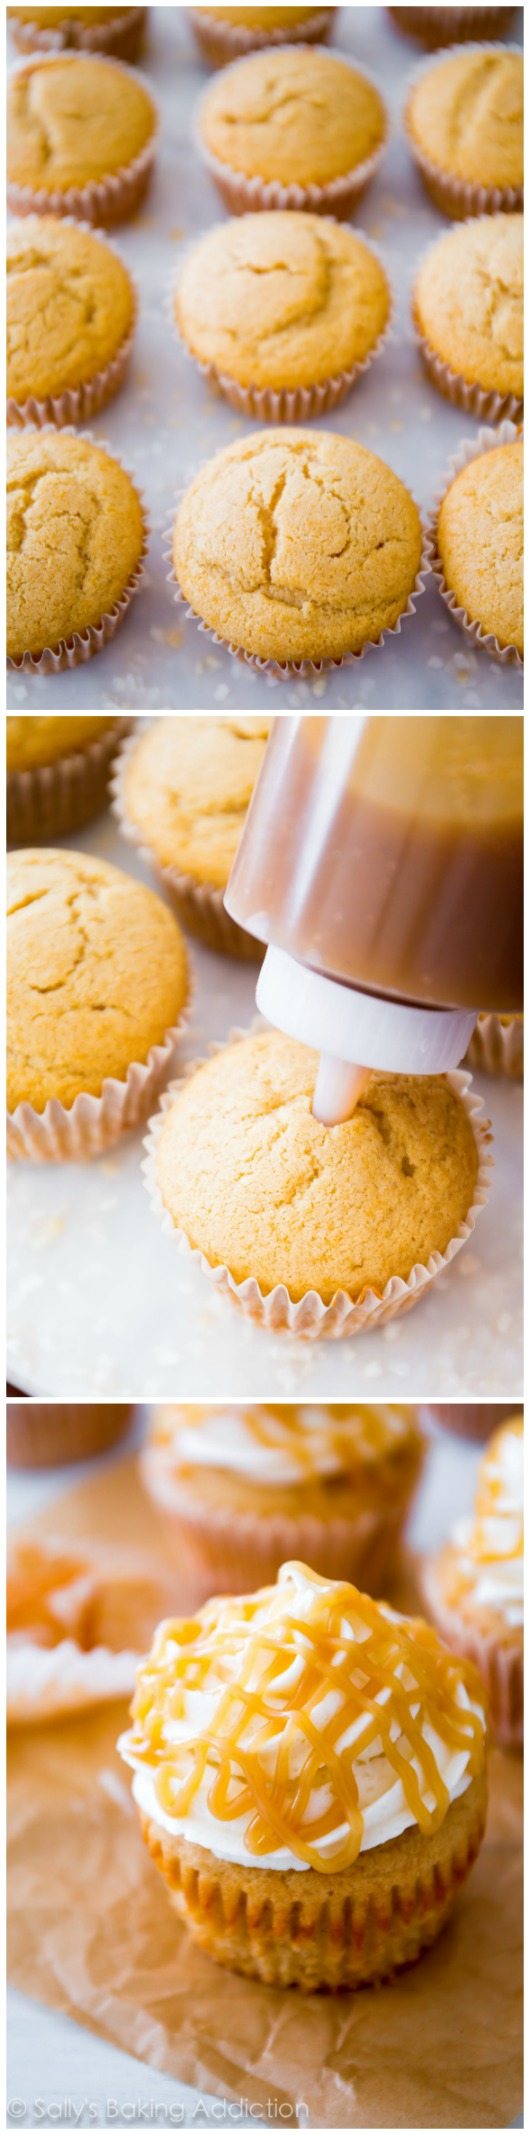 Cupcakes au sucre brun fourrés au caramel écossais par sallysbakingaddiction.com